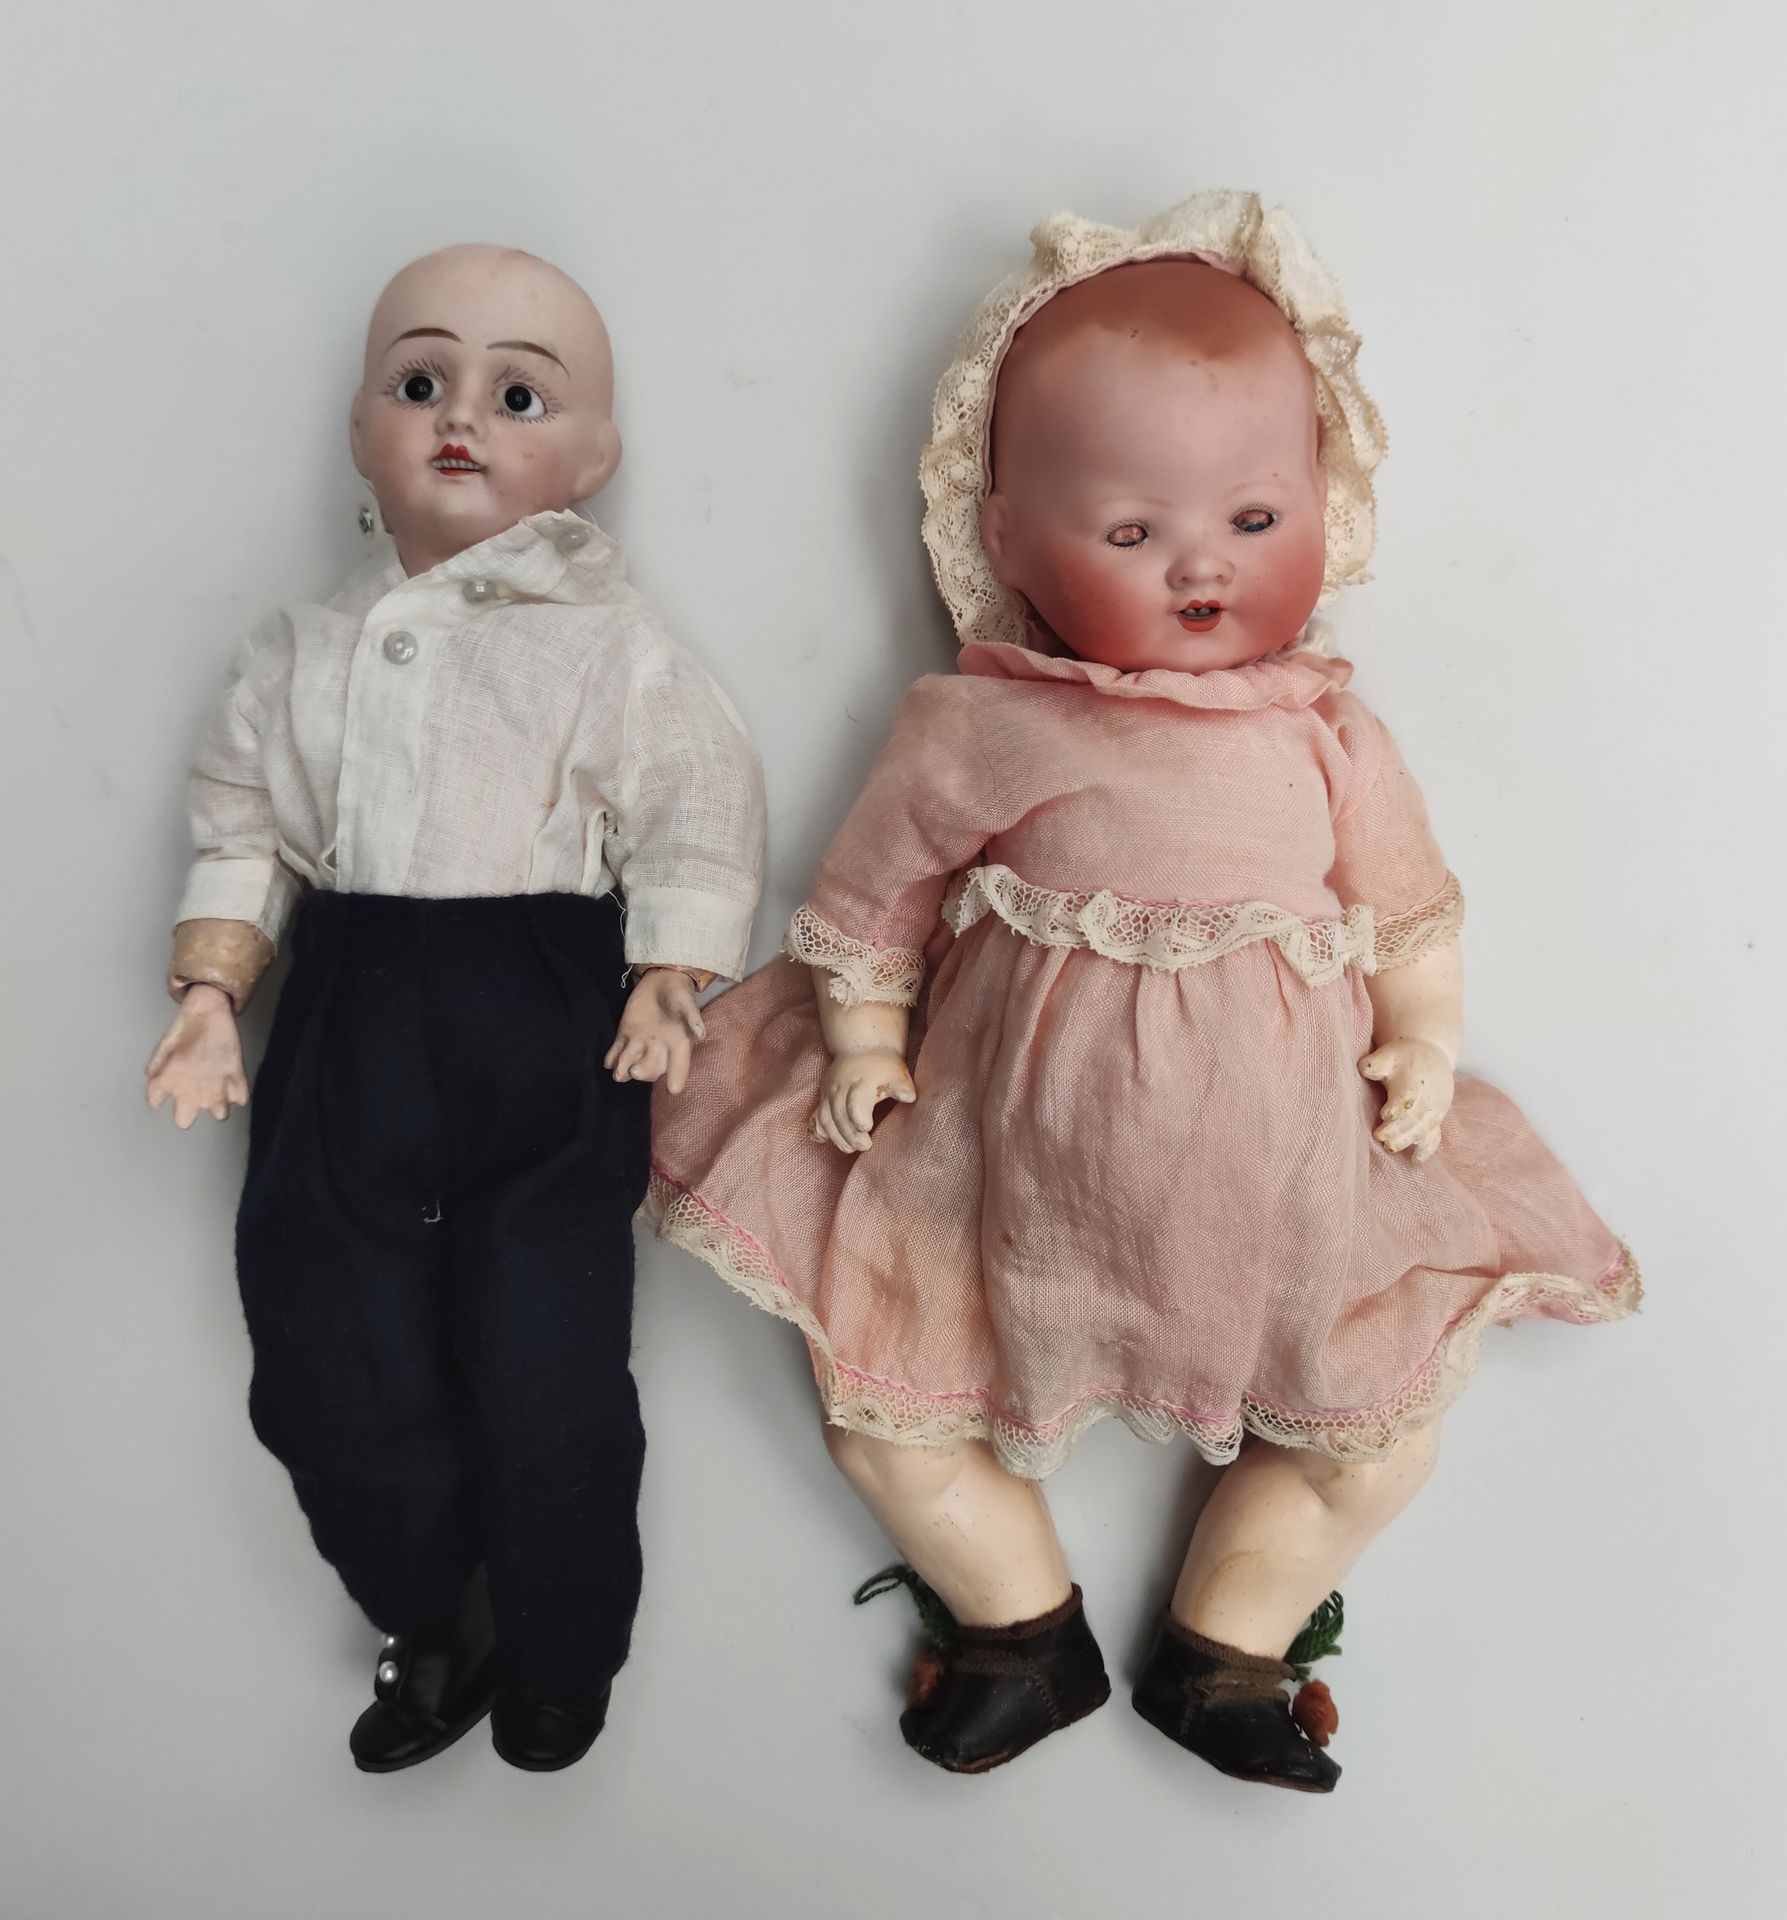 Null Set includes: 

- A full-headed Armand Marseille doll, mold 351-12k, sleepi&hellip;